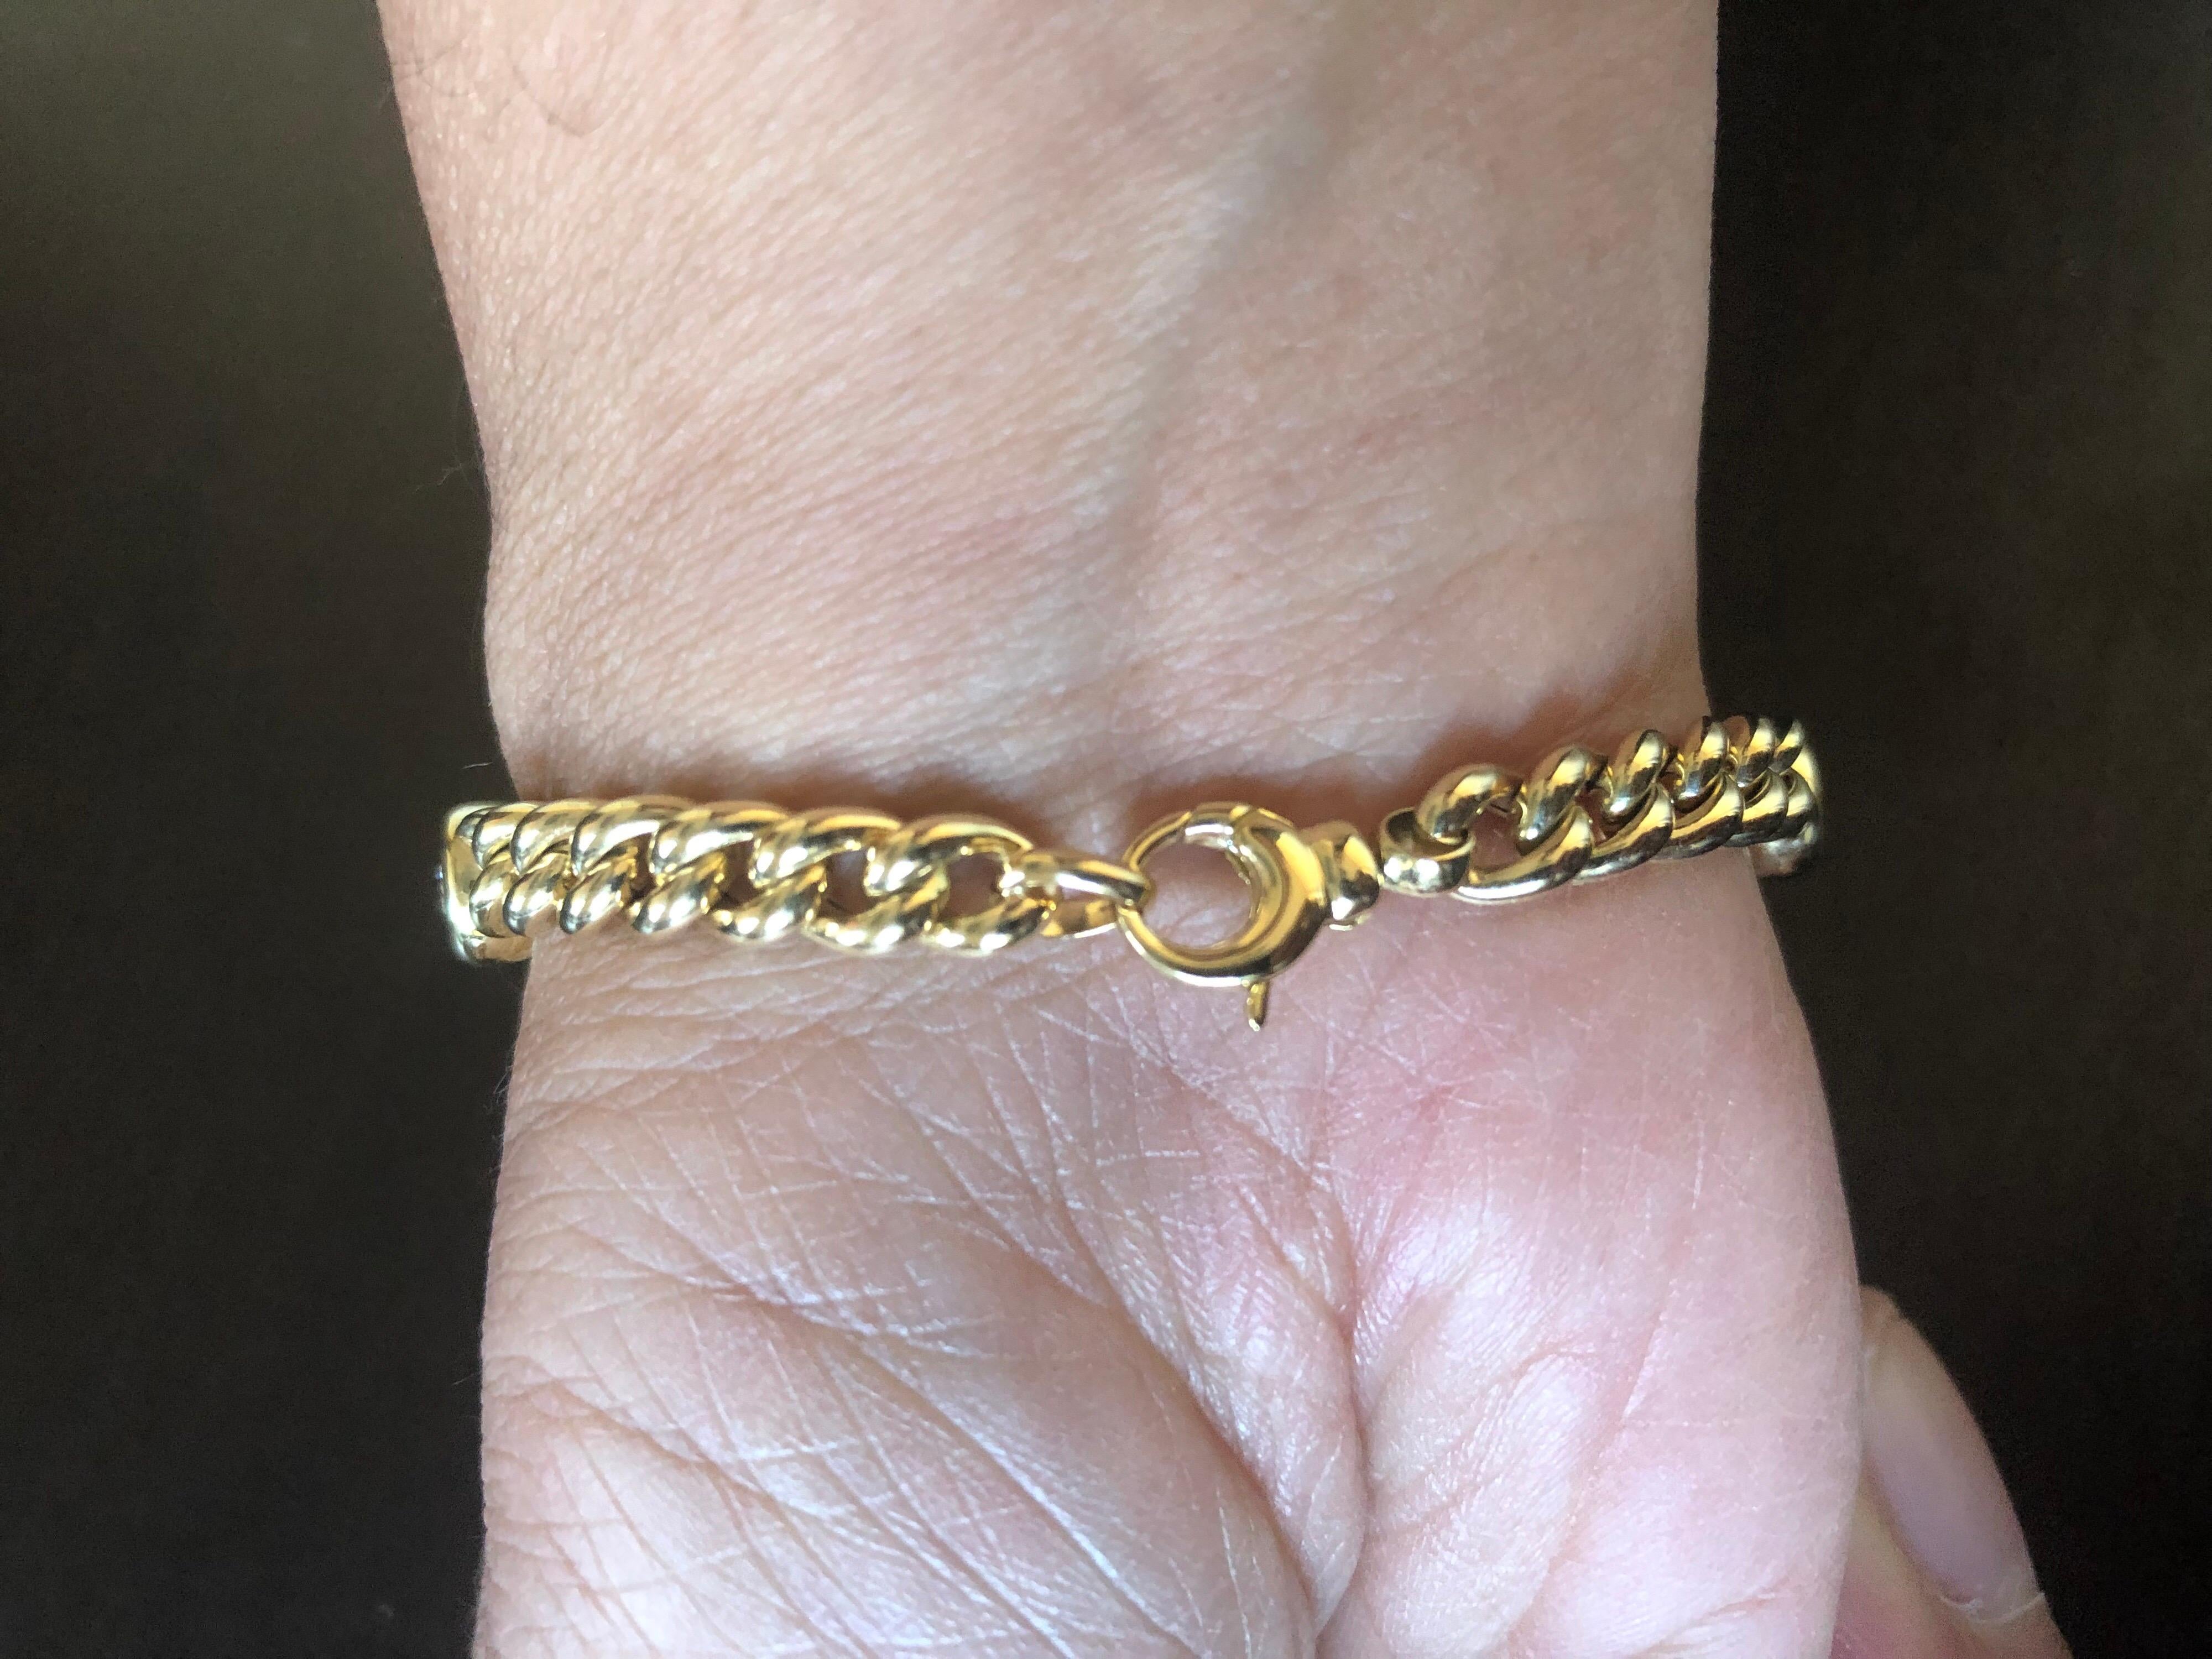 Modern 18 Karat Yellow Gold Link Bracelet